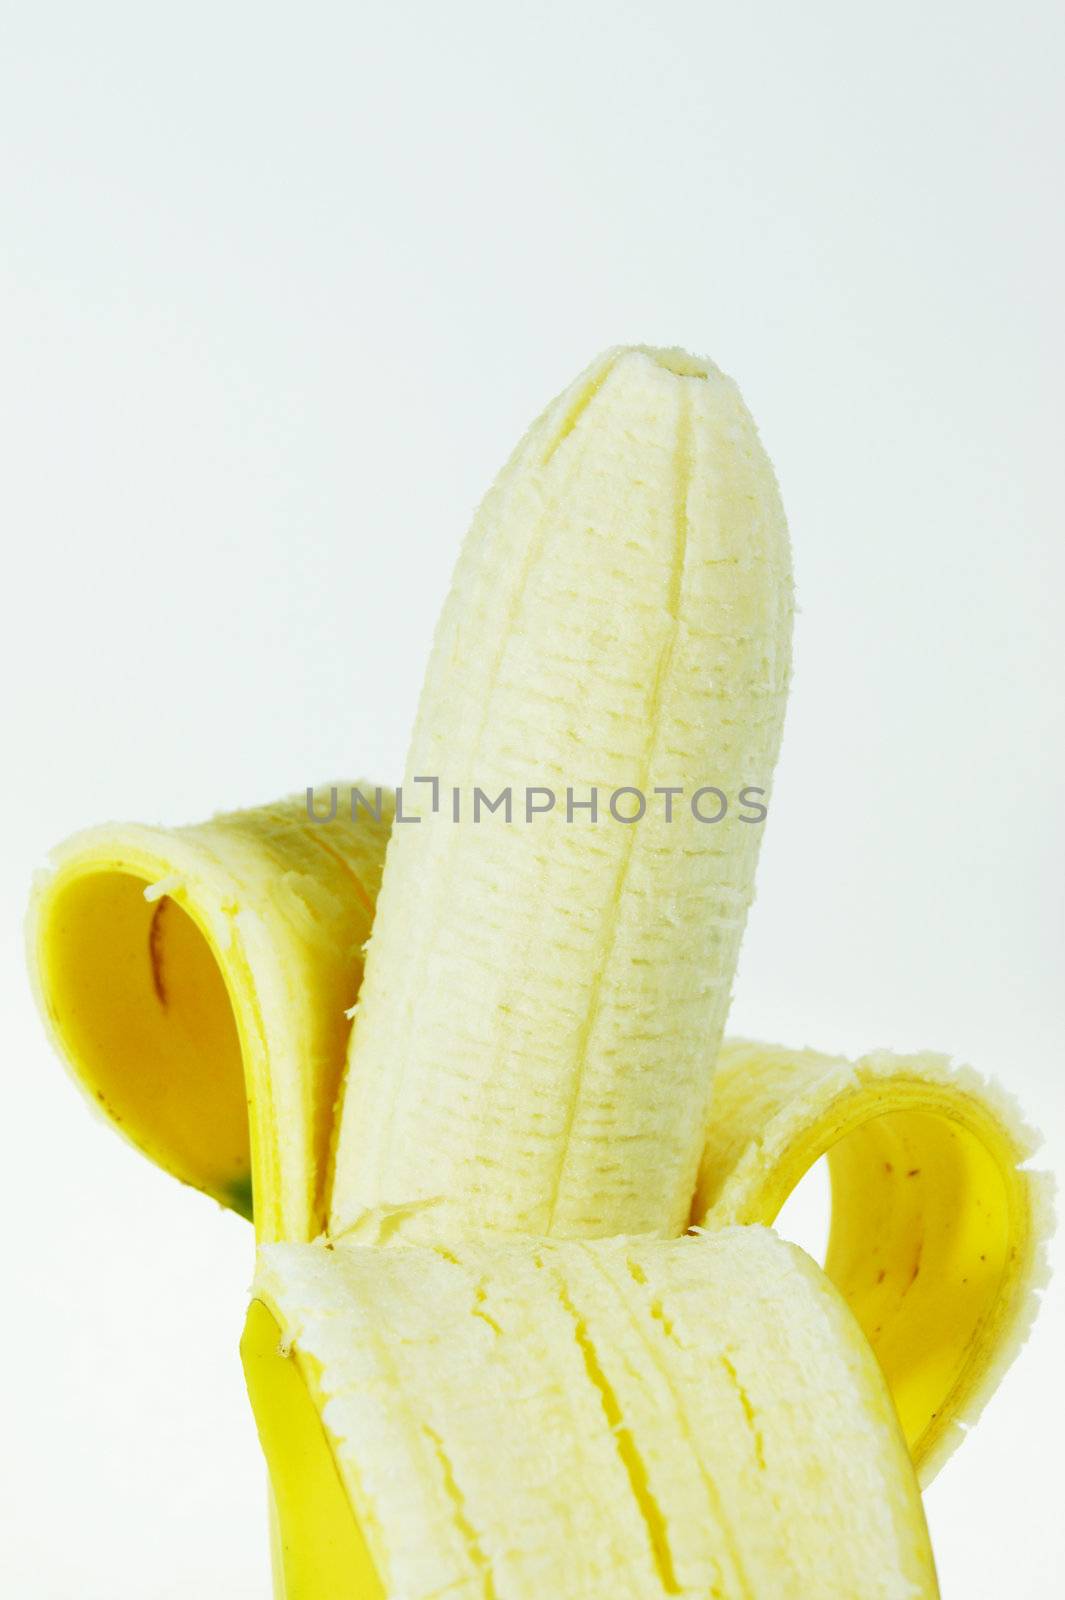 Banana peel isolated on white background







SONY DSC